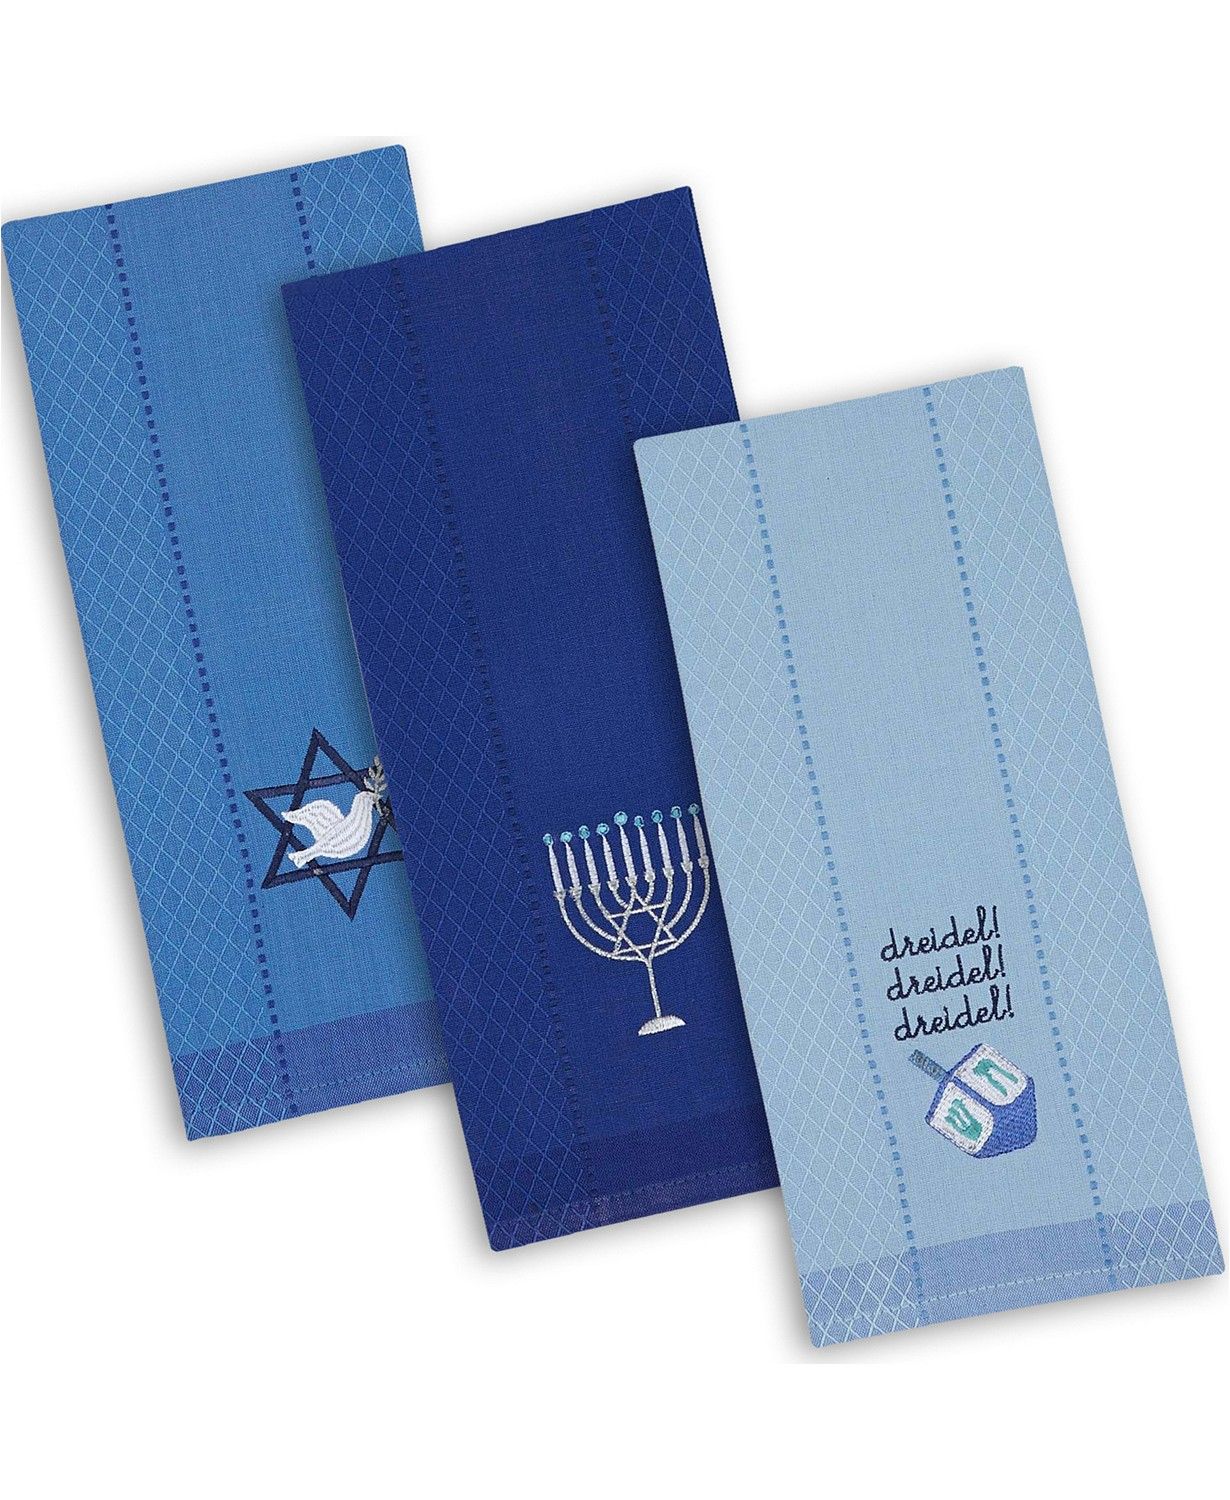 Design Imports Assorted Hanukkah Embroidered Dishtowels Set & Reviews - Home - Macy's | Macys (US)